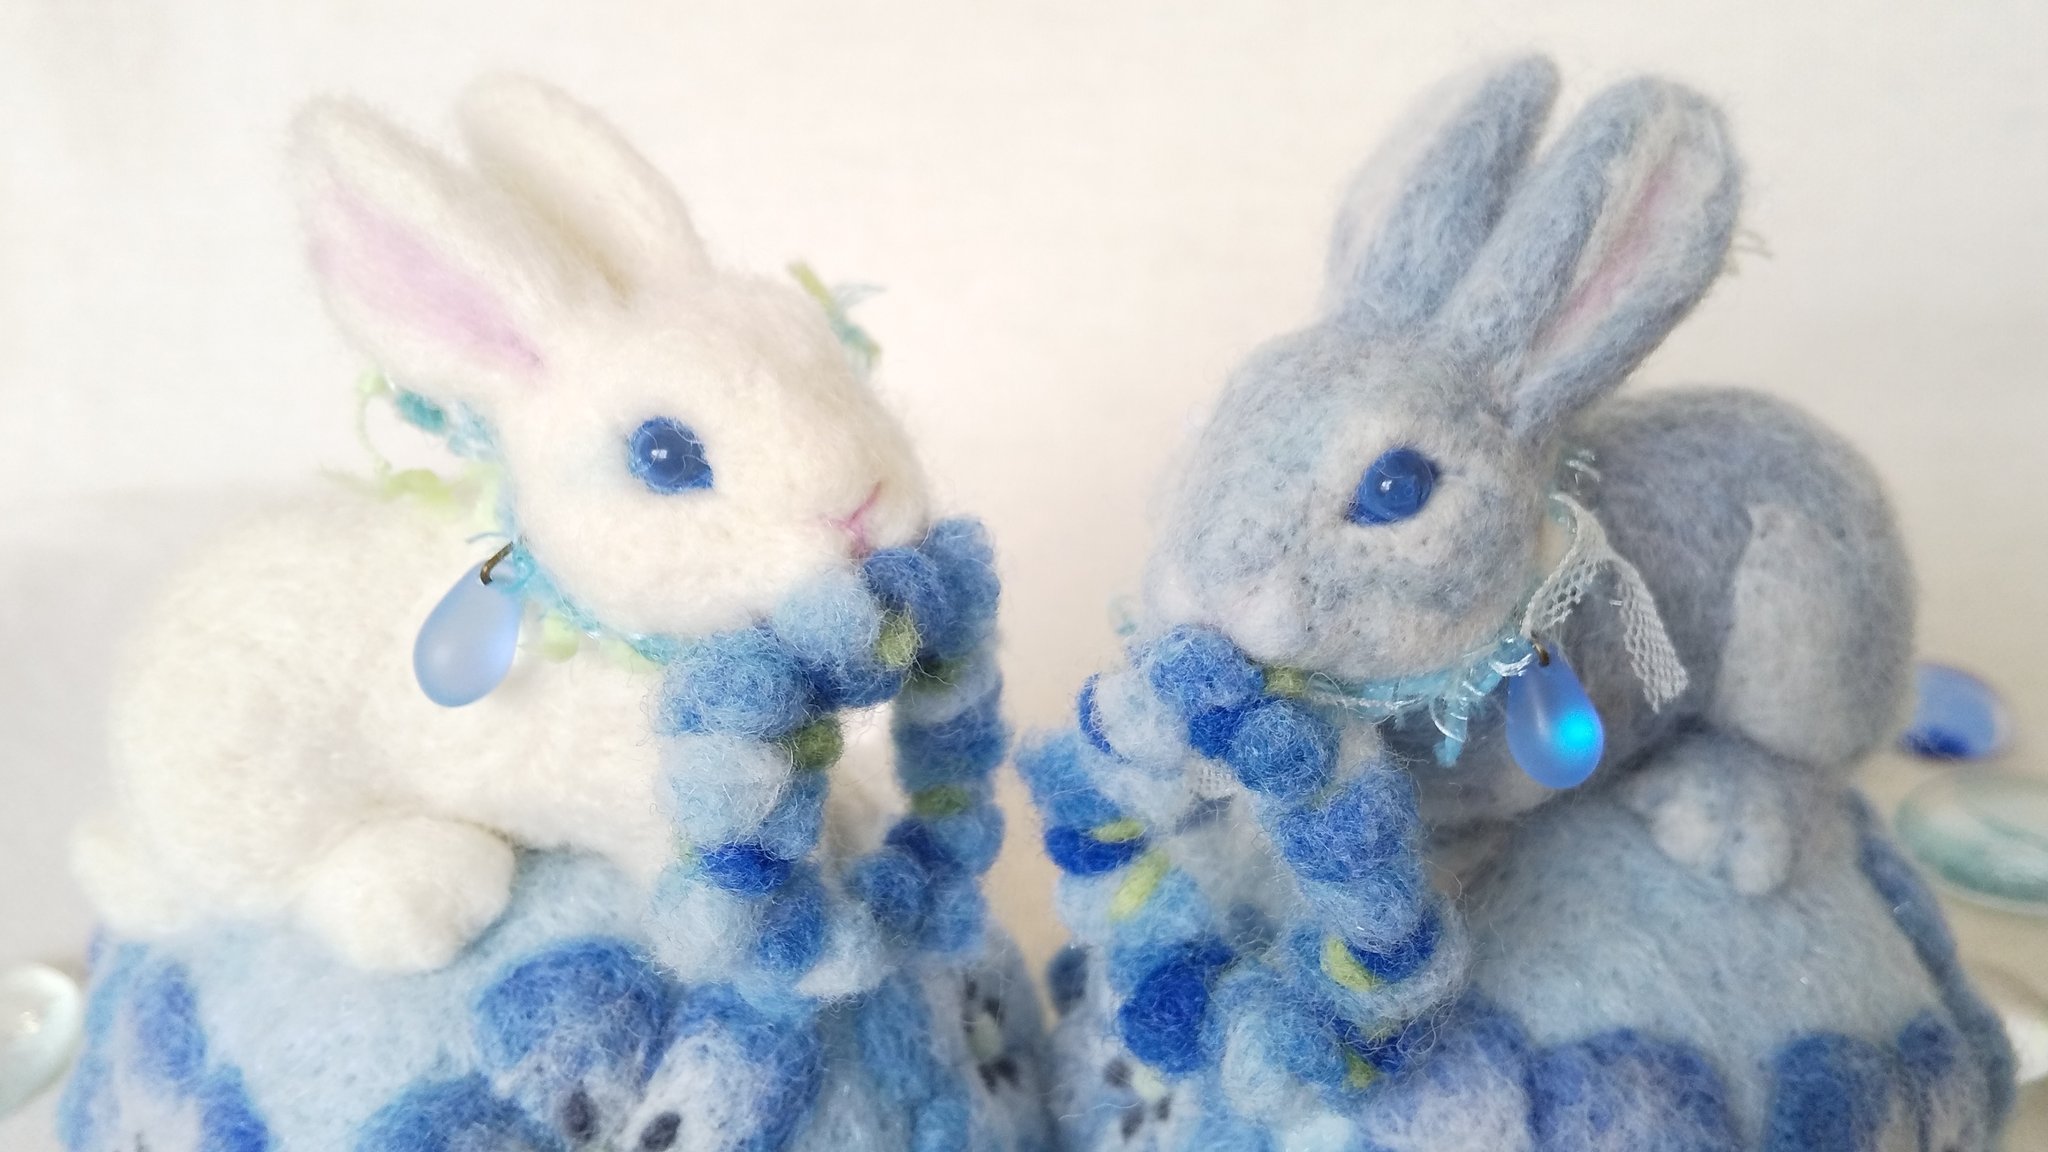 Foxglove ウサギとネモフィラ モフィラの花畑とウサギの針刺し ウサギの毛色はホワイトとブルーグレー 目の色は透き通る空色 下地はスカイブルーとホライズンブルーのグラデーションにしました ネモフィラの花色は3色 様々な青色を使った作品